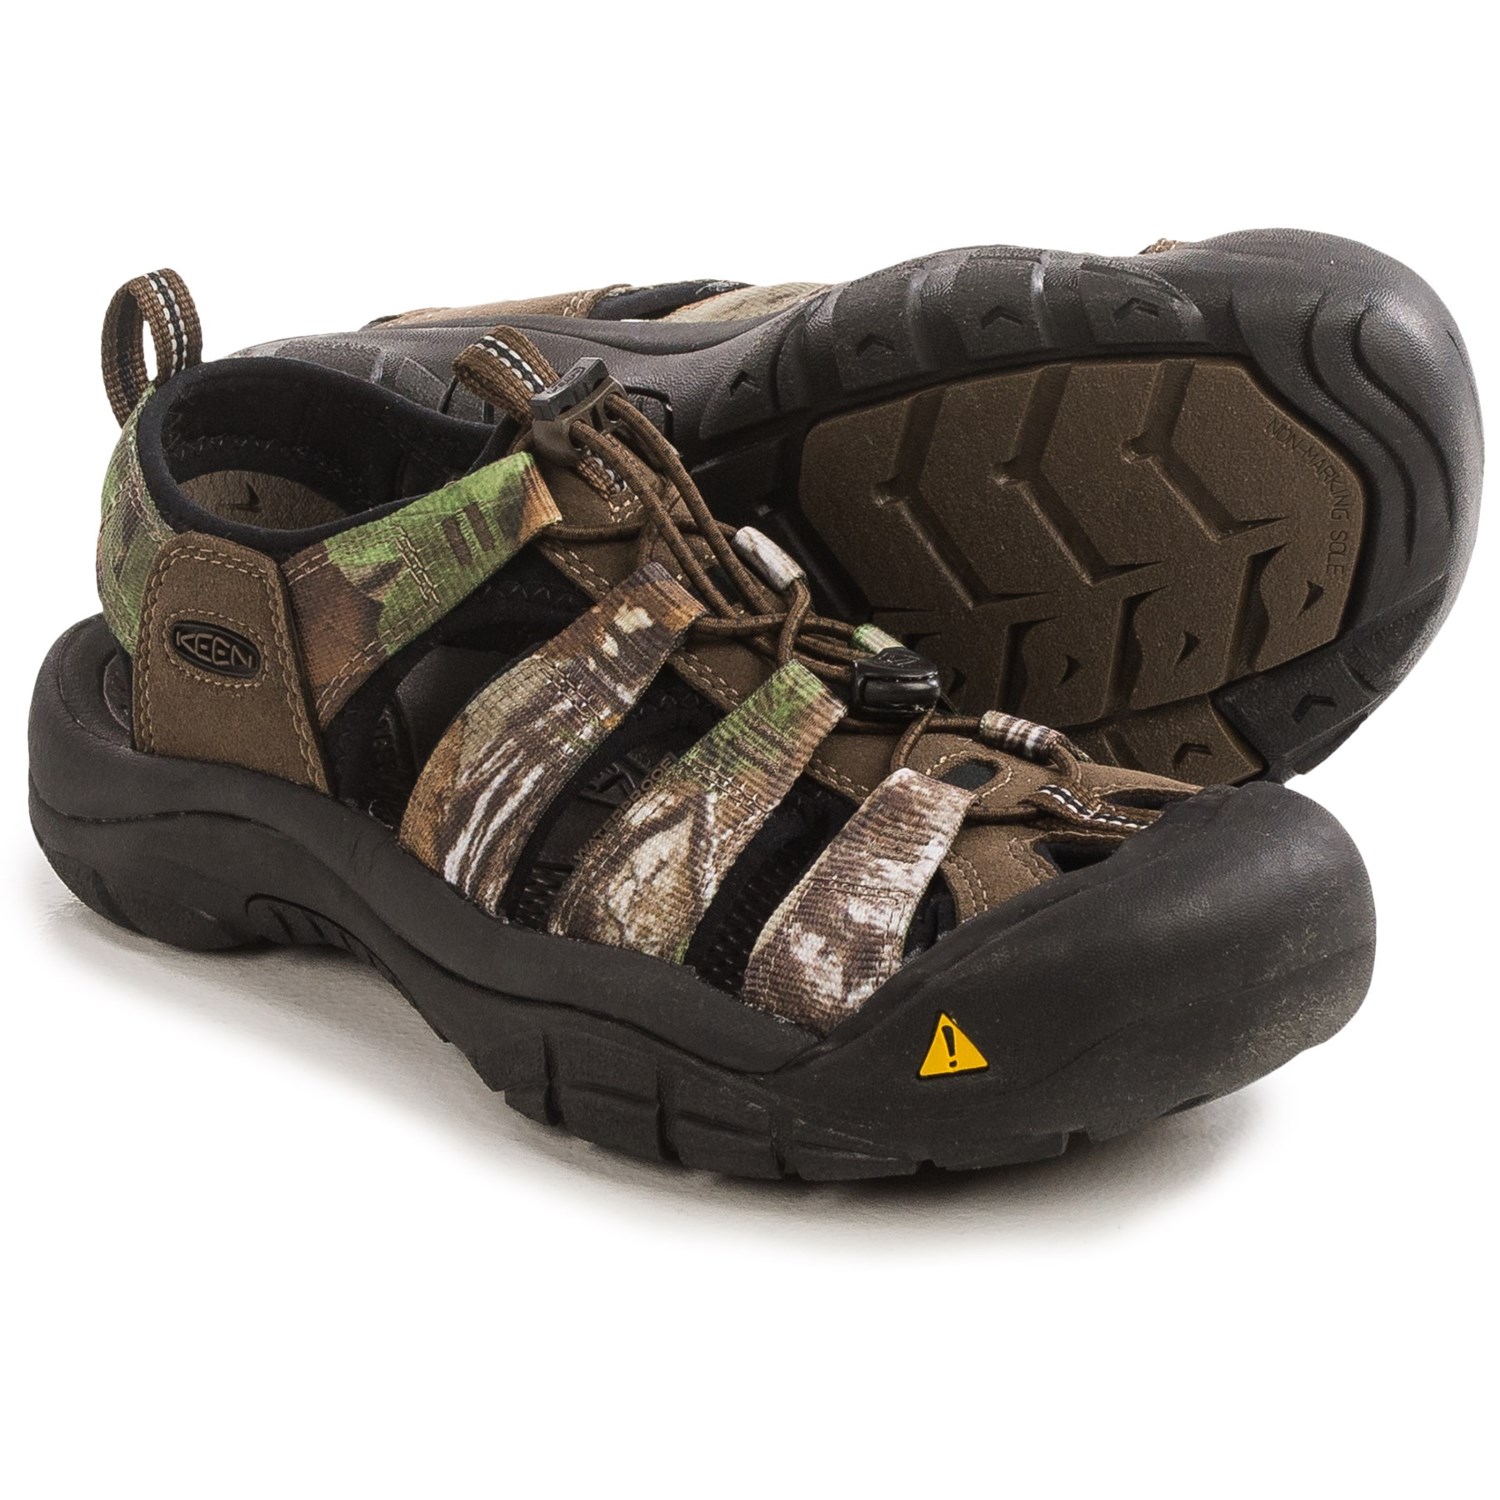 Keen Newport H2 Sport Sandals (For Men) - Save 50%